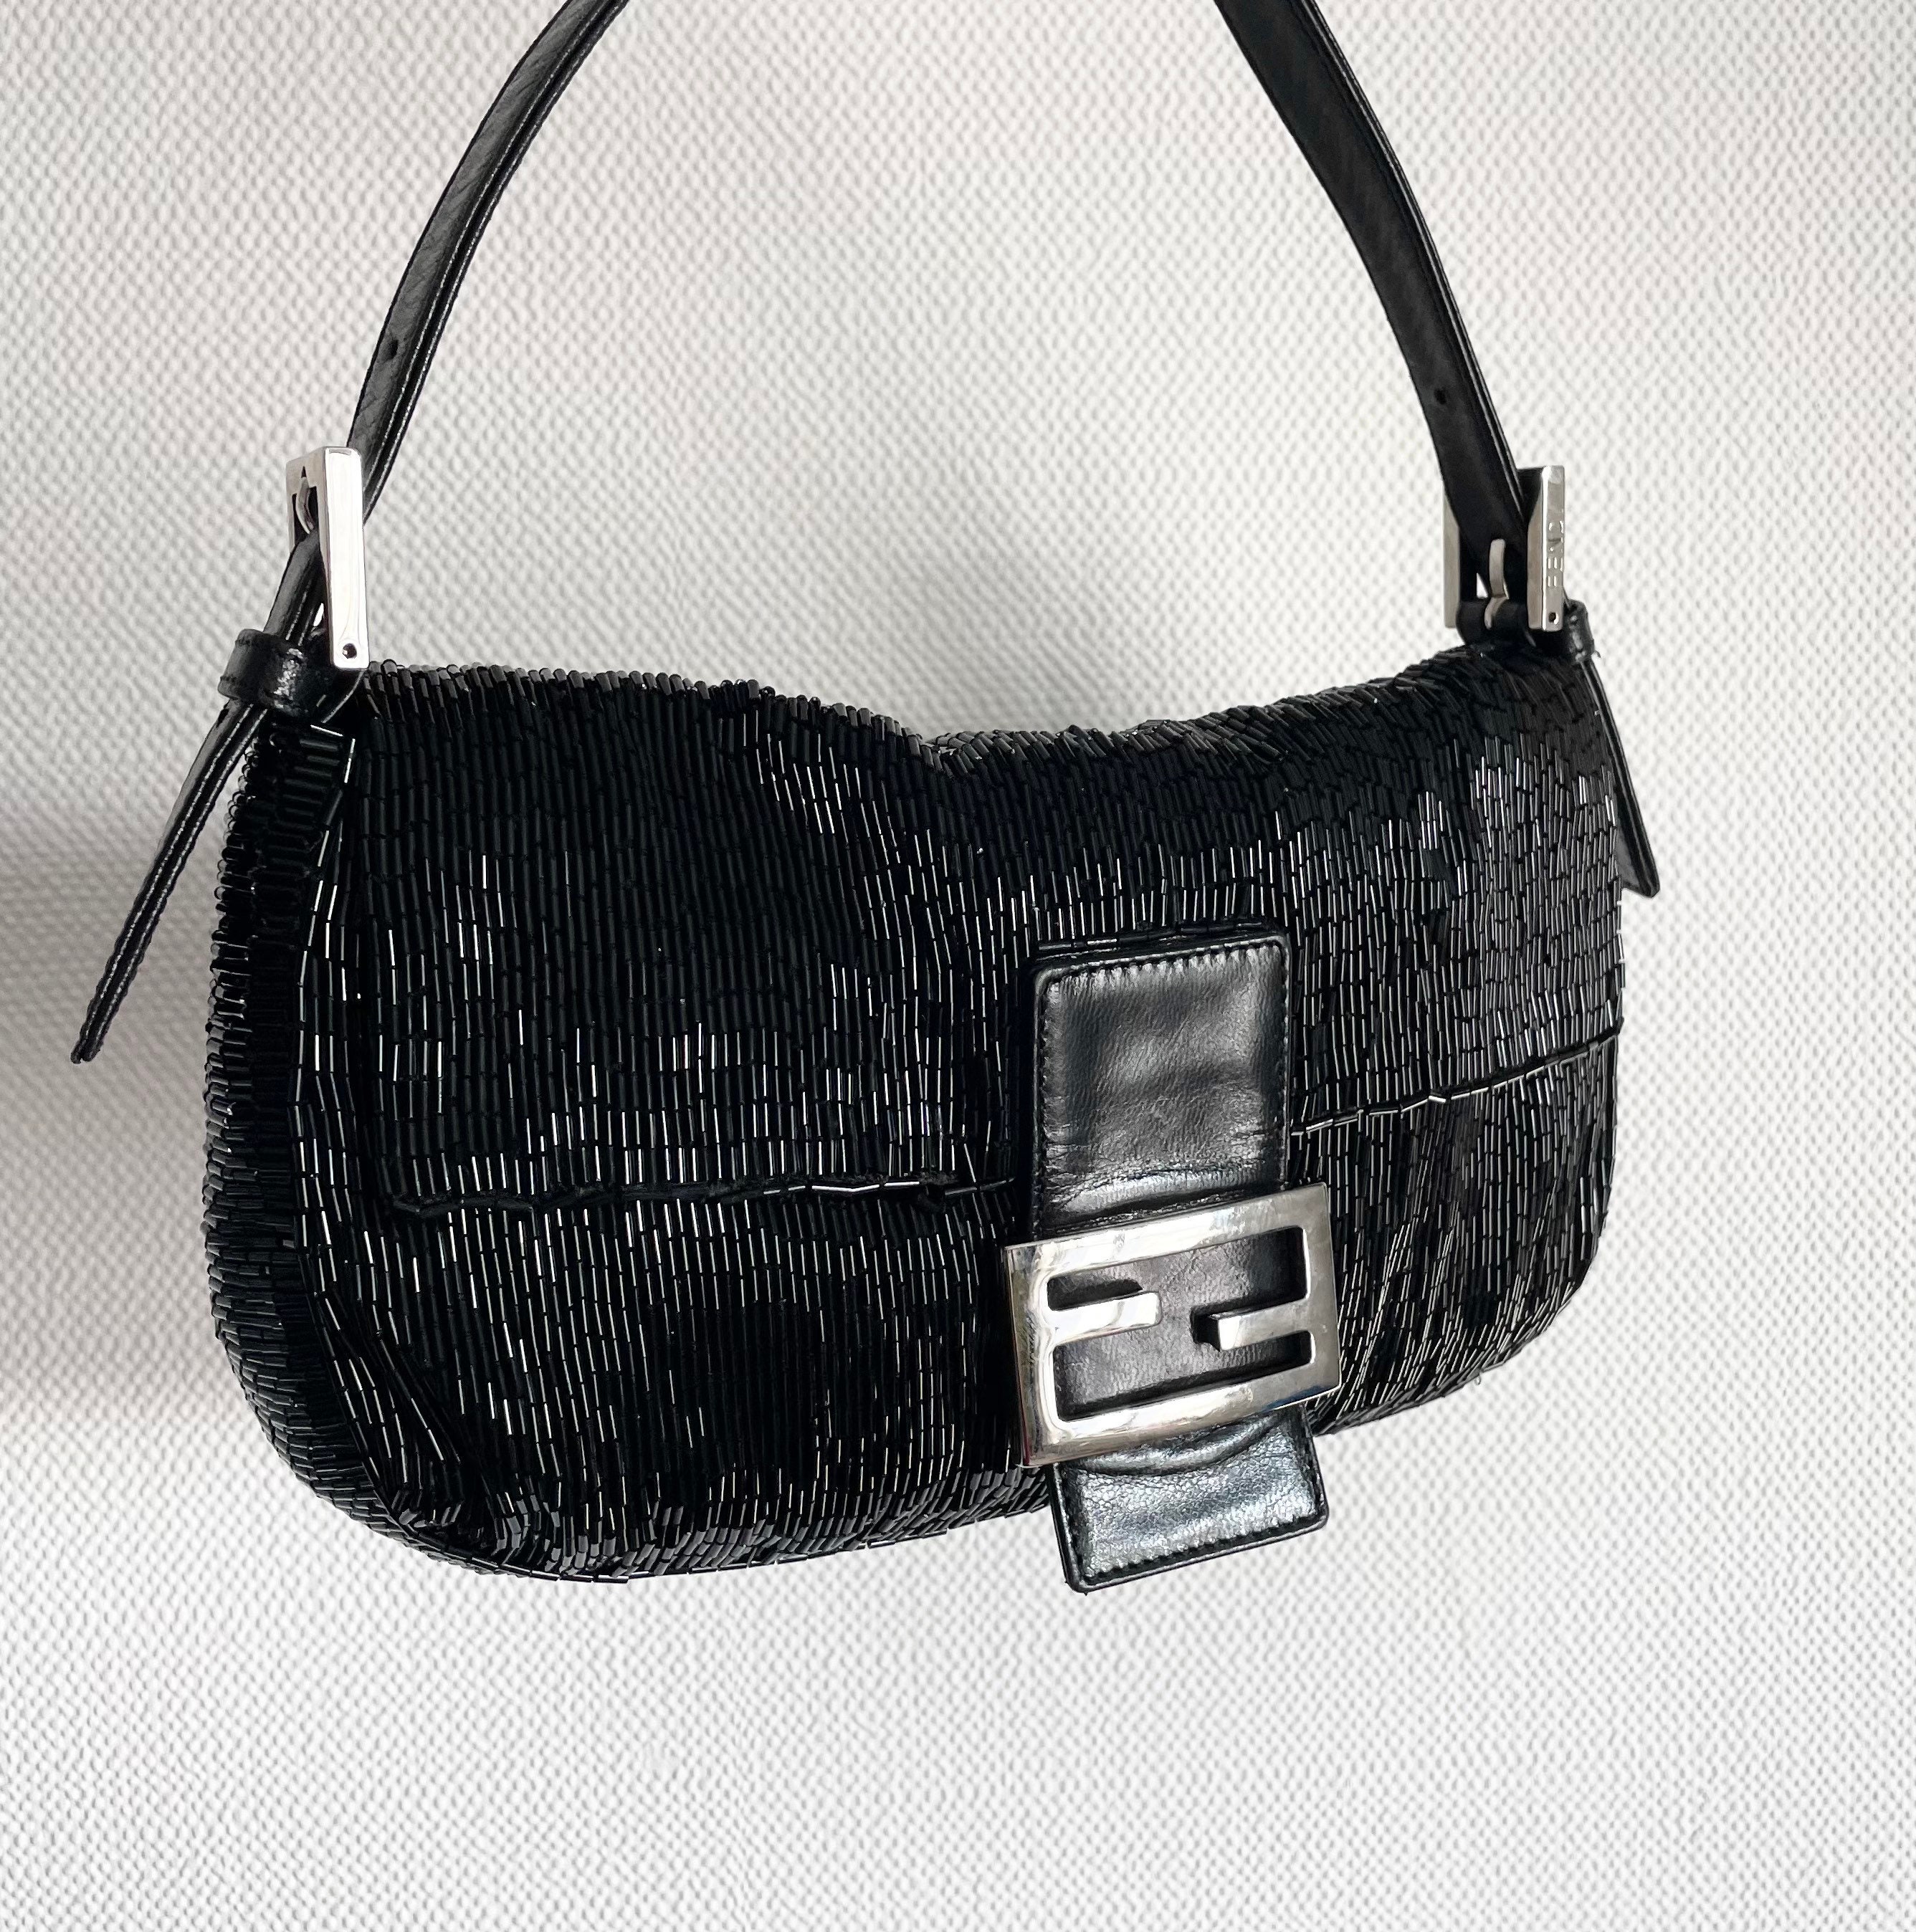 Fendi Bag Authentic Fendi Beaded Shoulder Baguette Bag in 